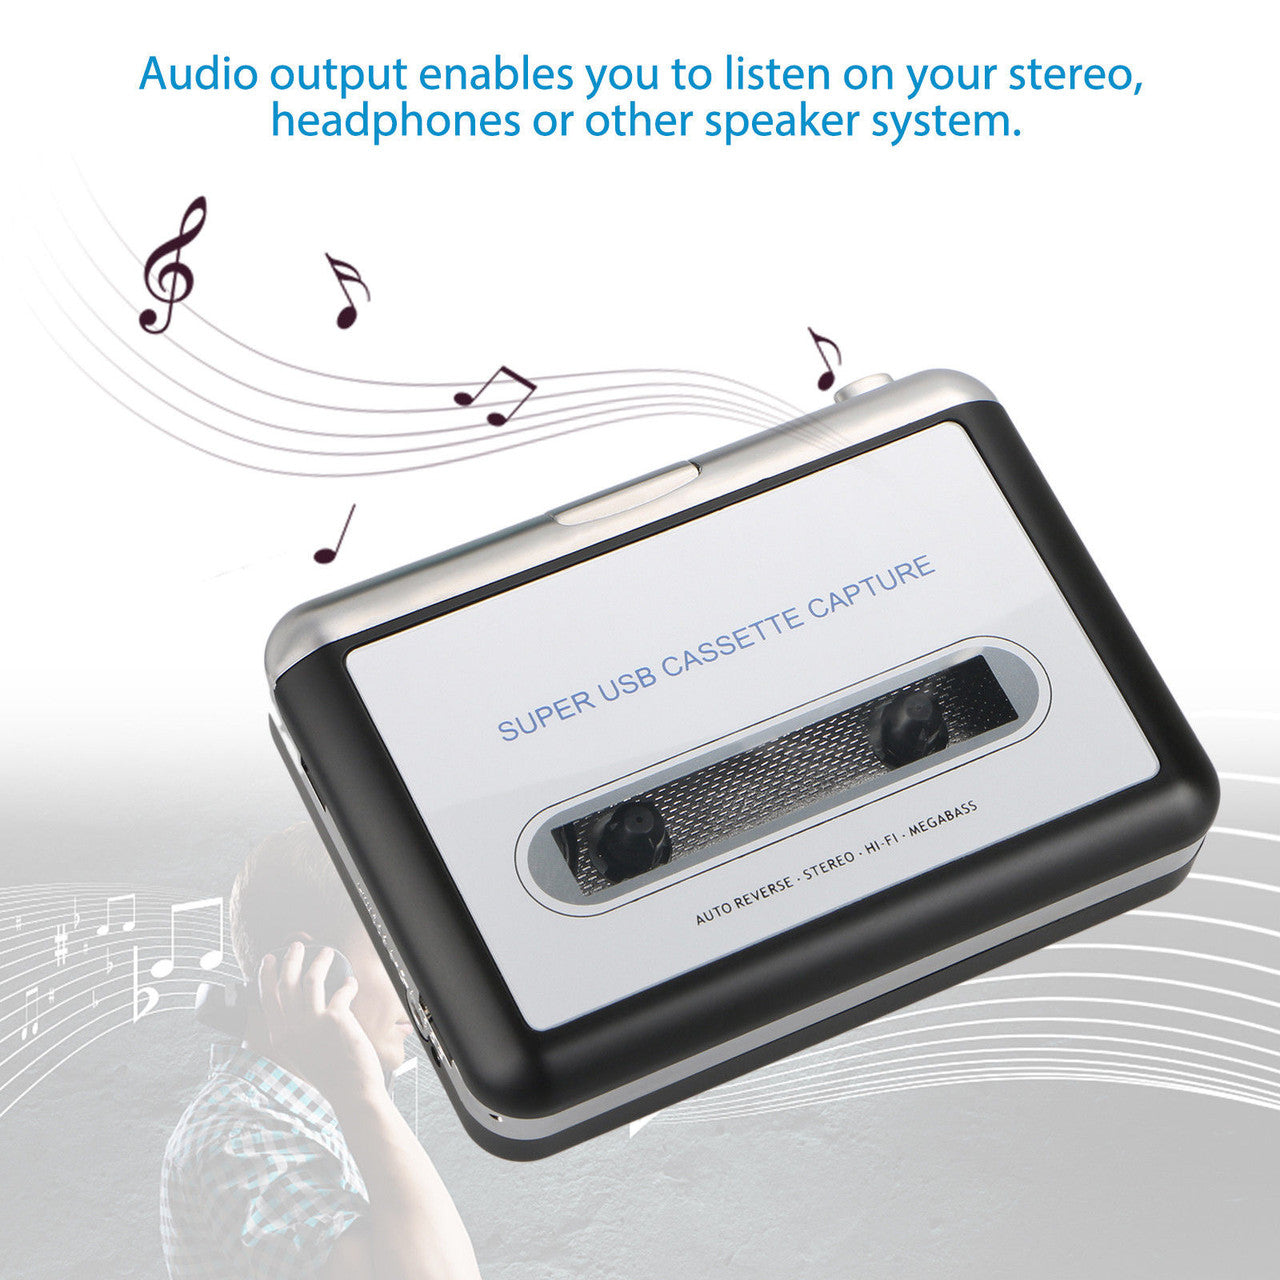 Cassette Tape to MP3 CD Converter via USB, Portable Cassette Player Convert Cassette Tape to Digital MP3, with Earphones